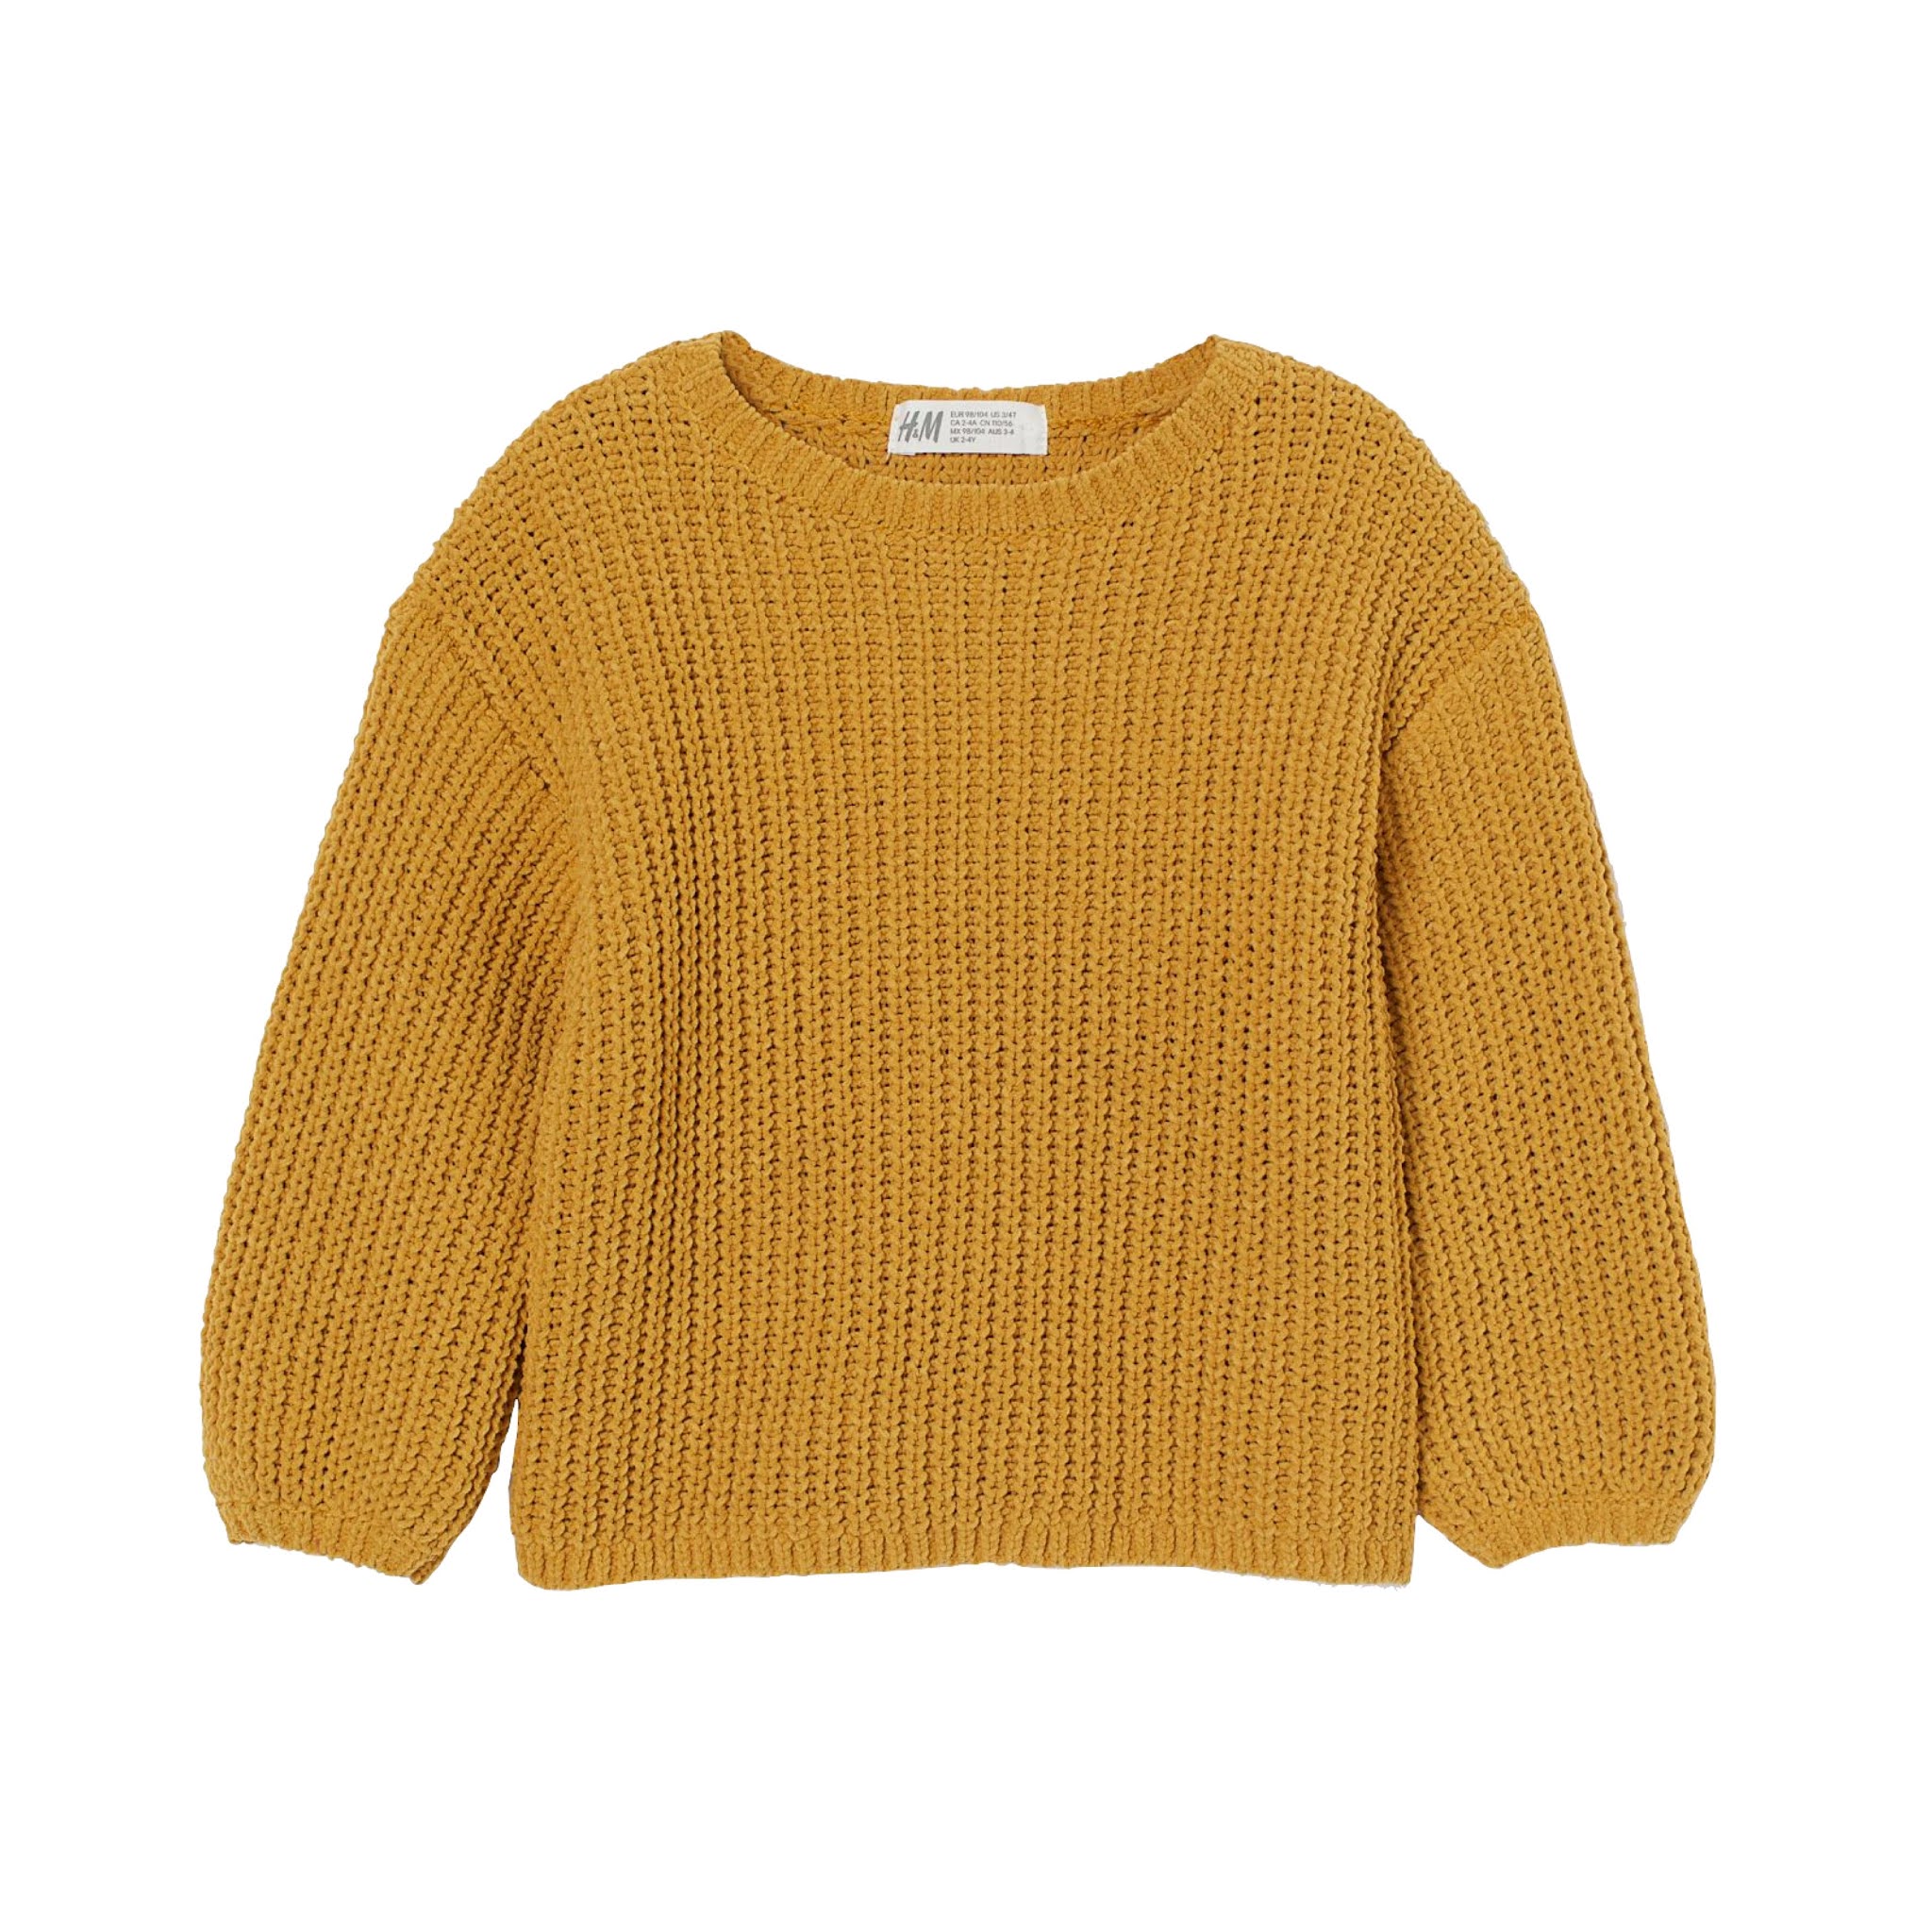 Dark Yellow Knit Sweater from H&M Kids